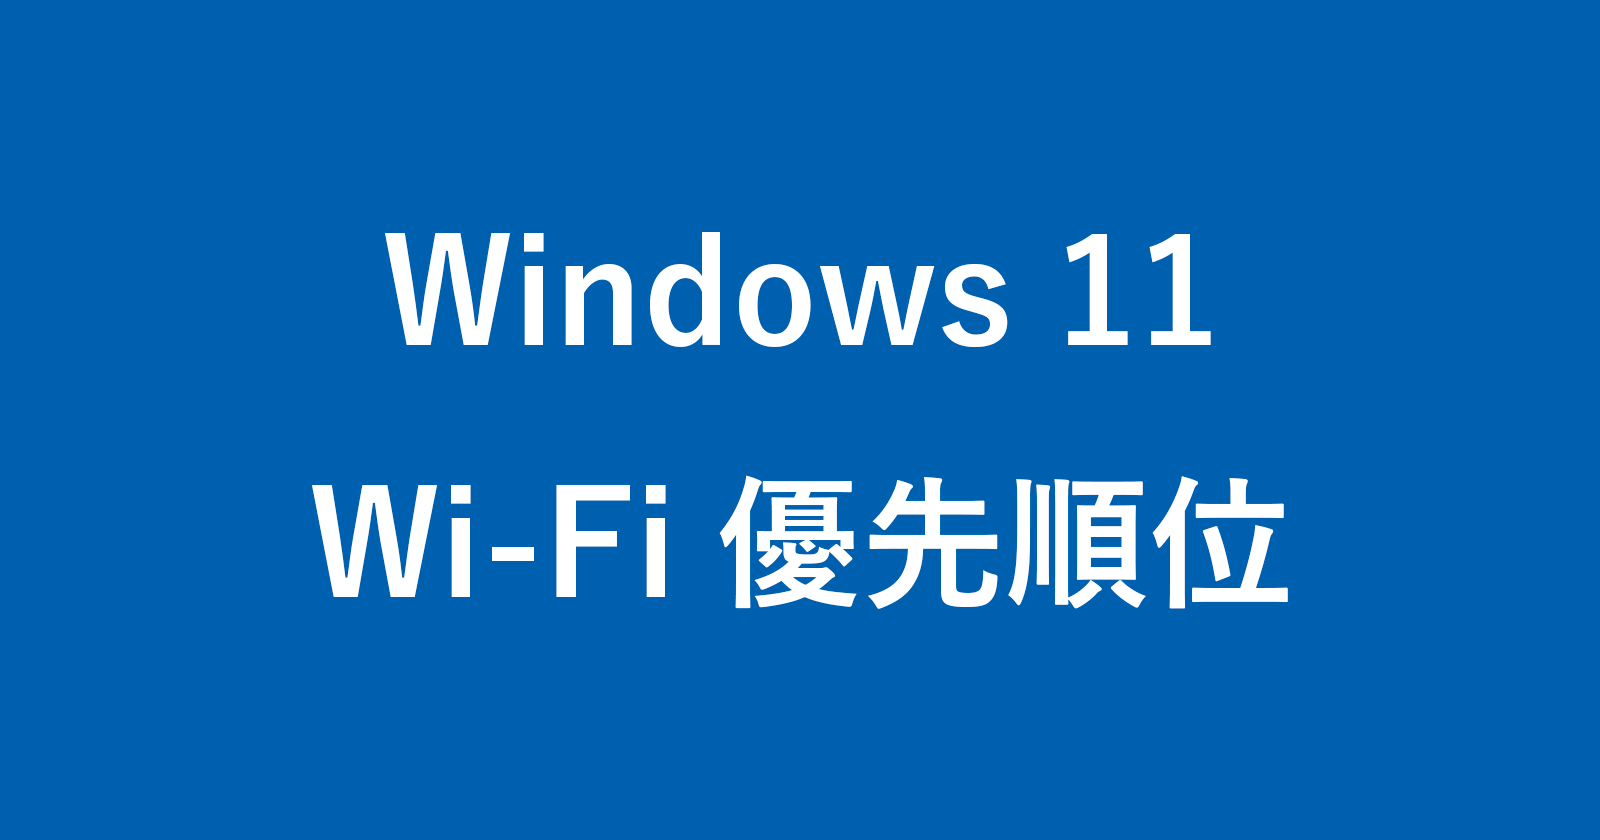 windows 11 wi fi priority